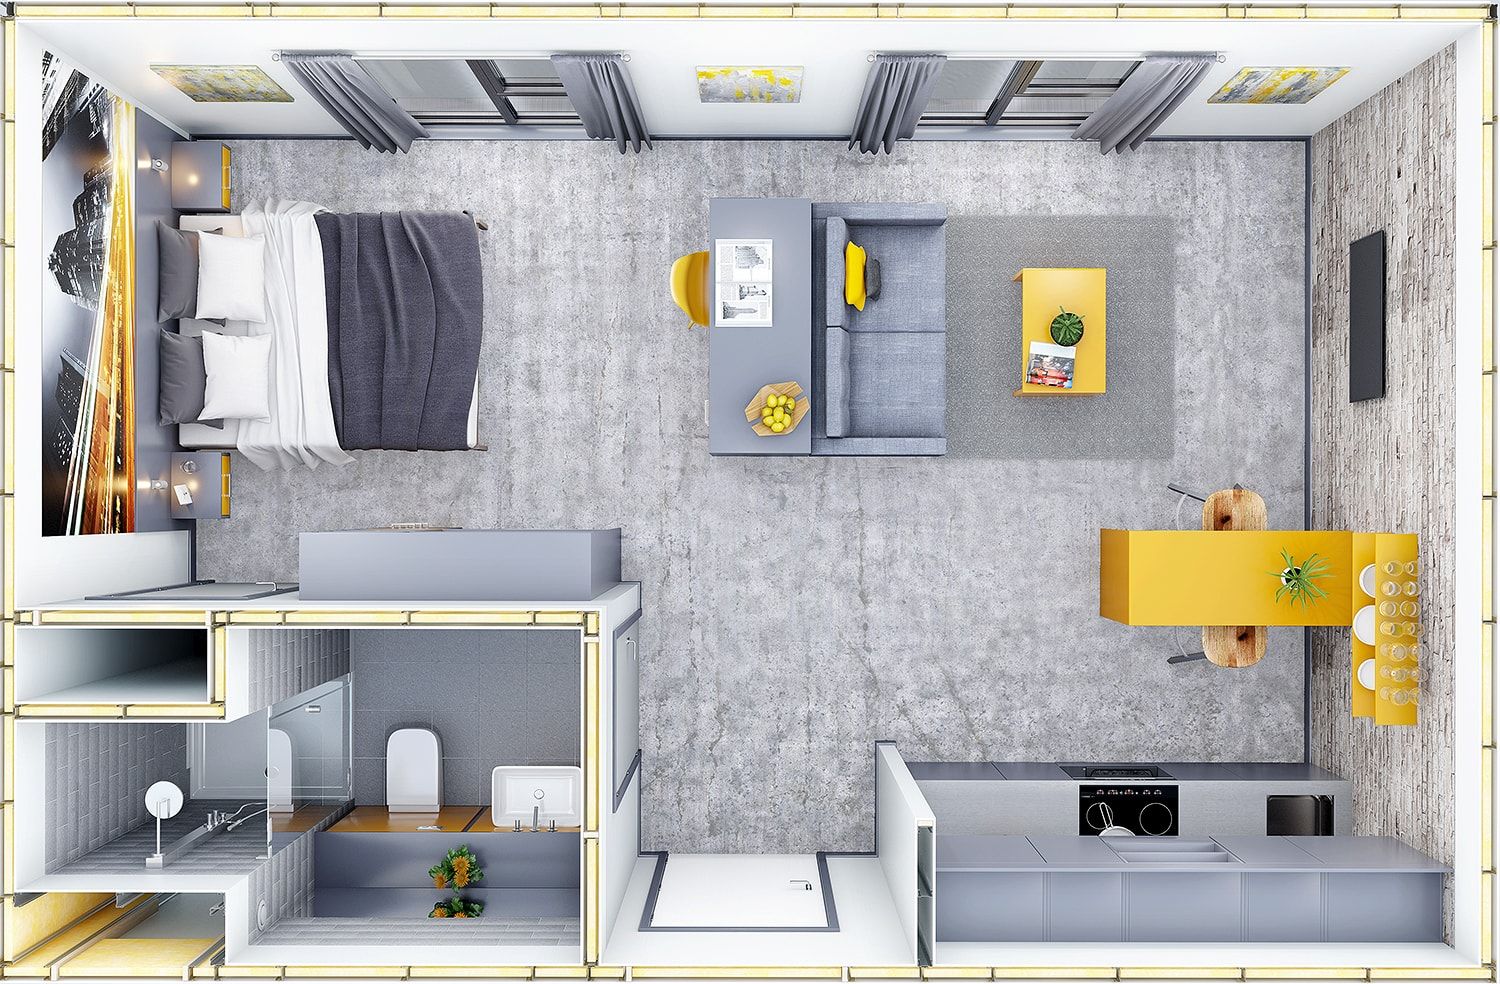 Plan view of studio Apartment CRISP3D Quartos modernos Tijolo internalCGI,visualisation,CGI,3dvisualisation,studio